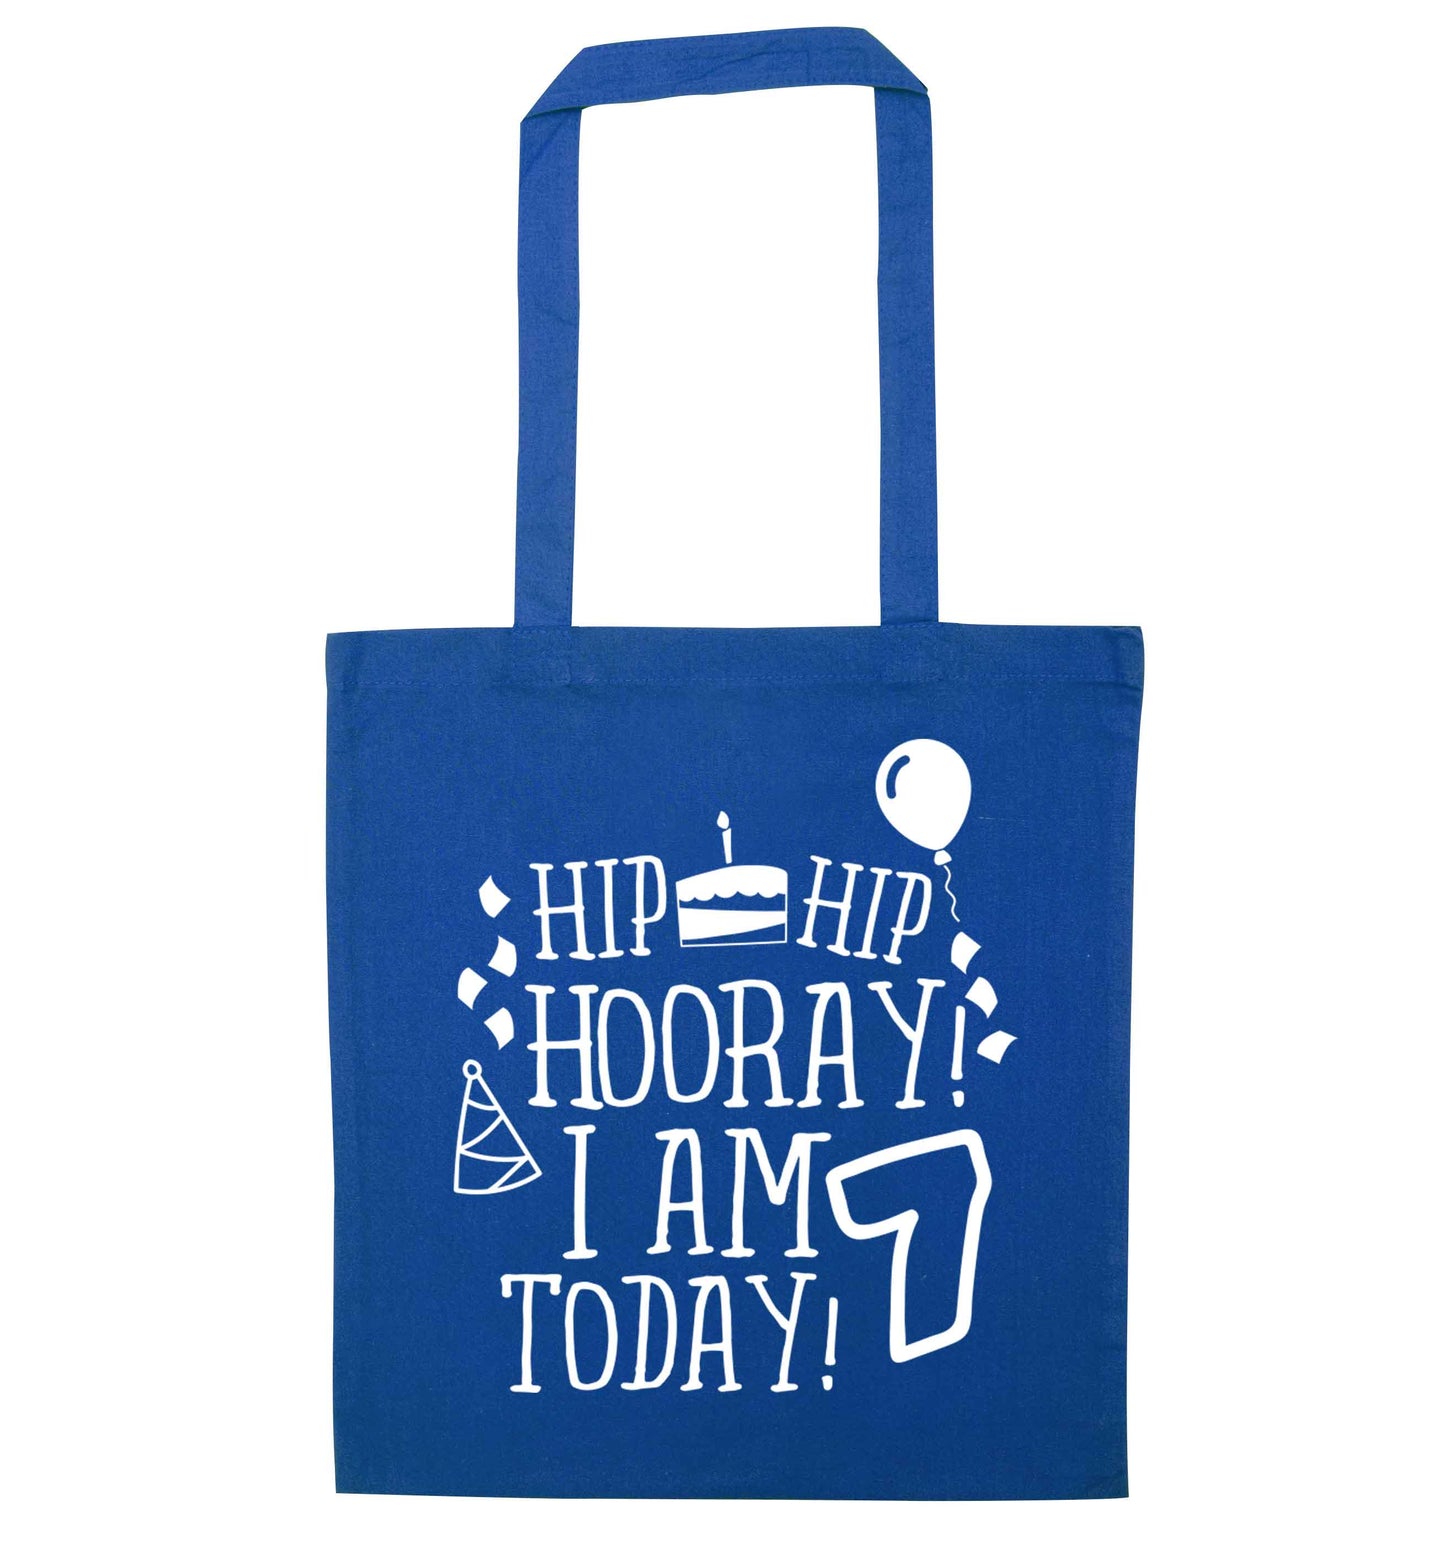 Hip hip I am seven today! blue tote bag